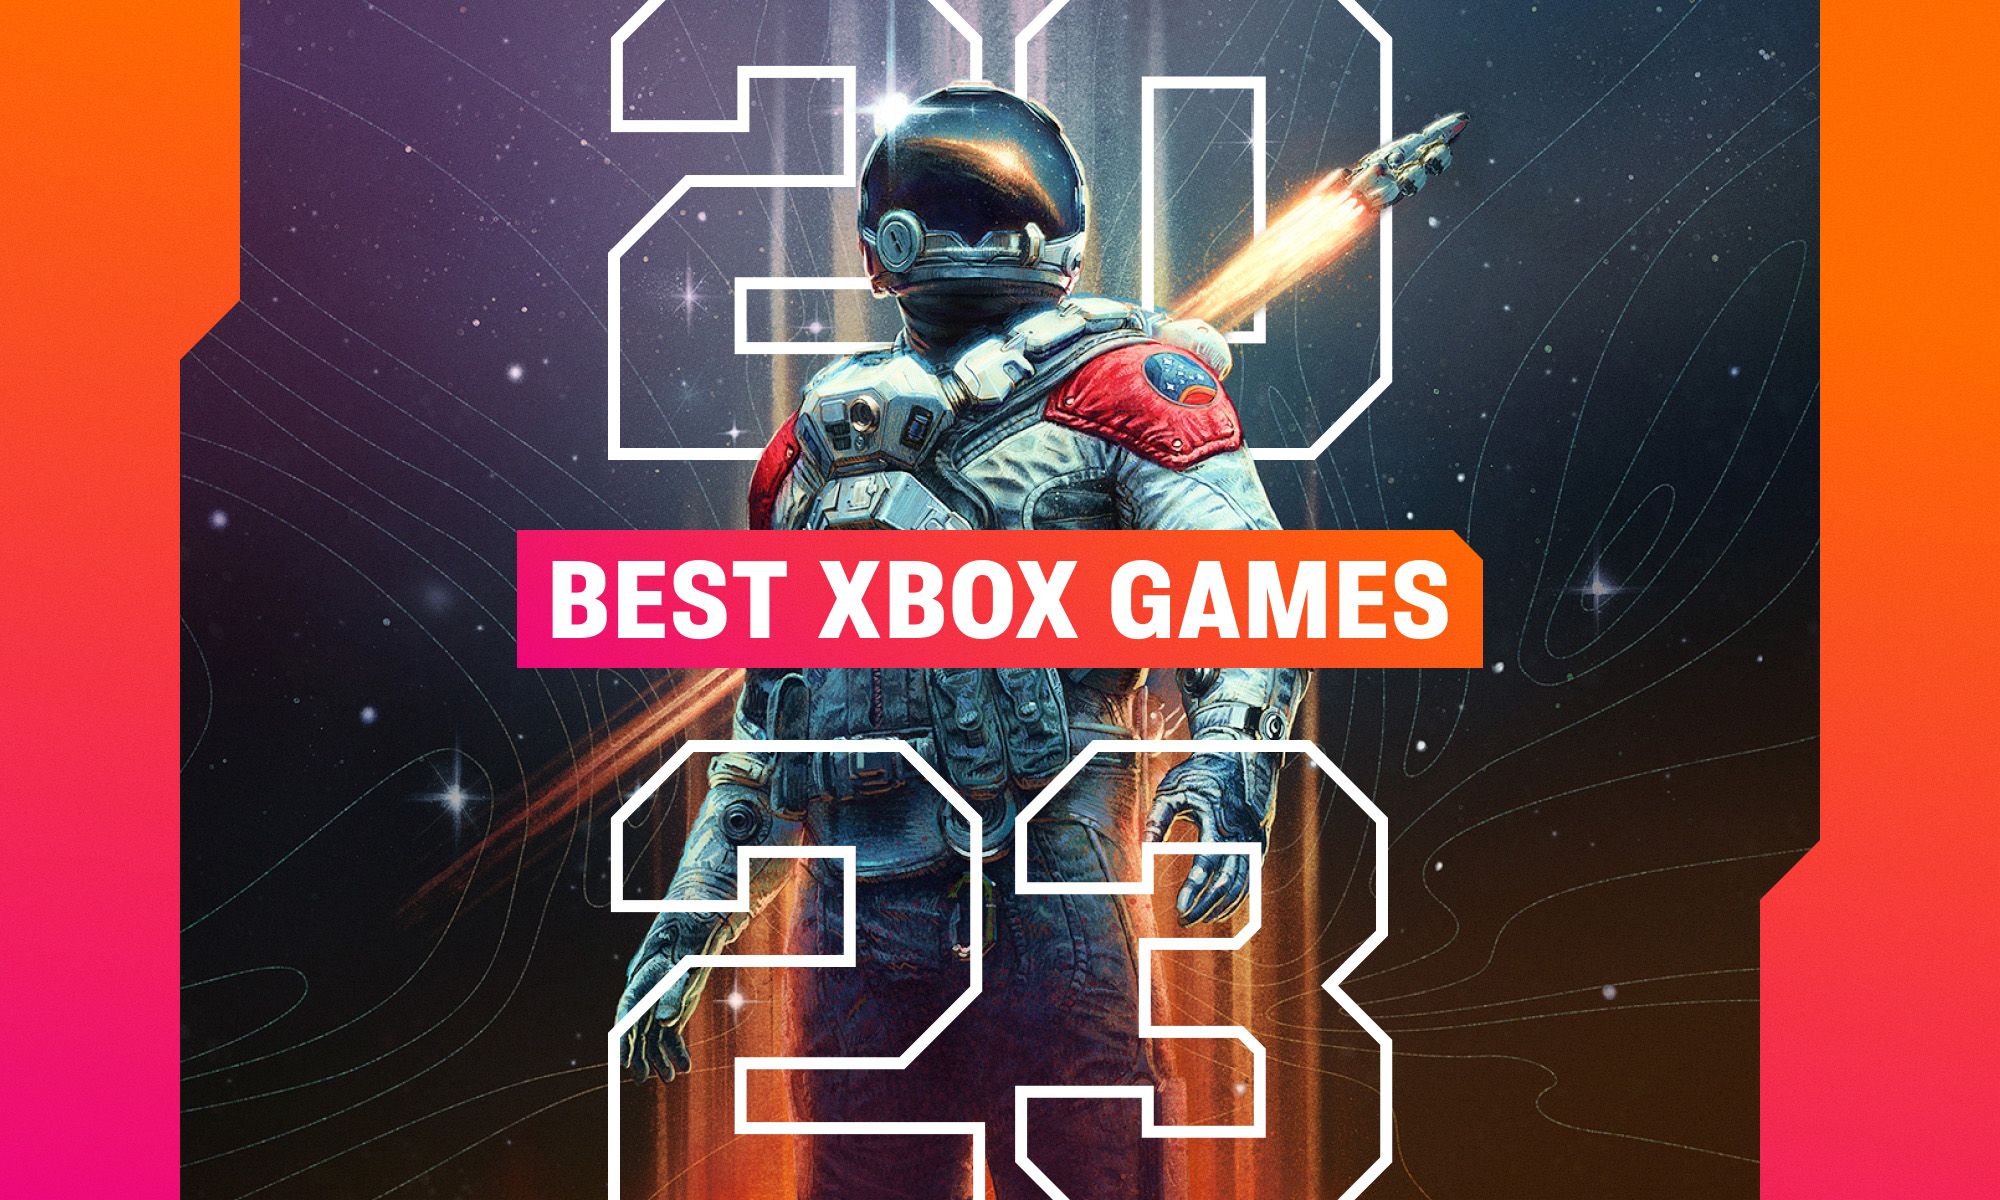 Best Xbox RPGs 2023